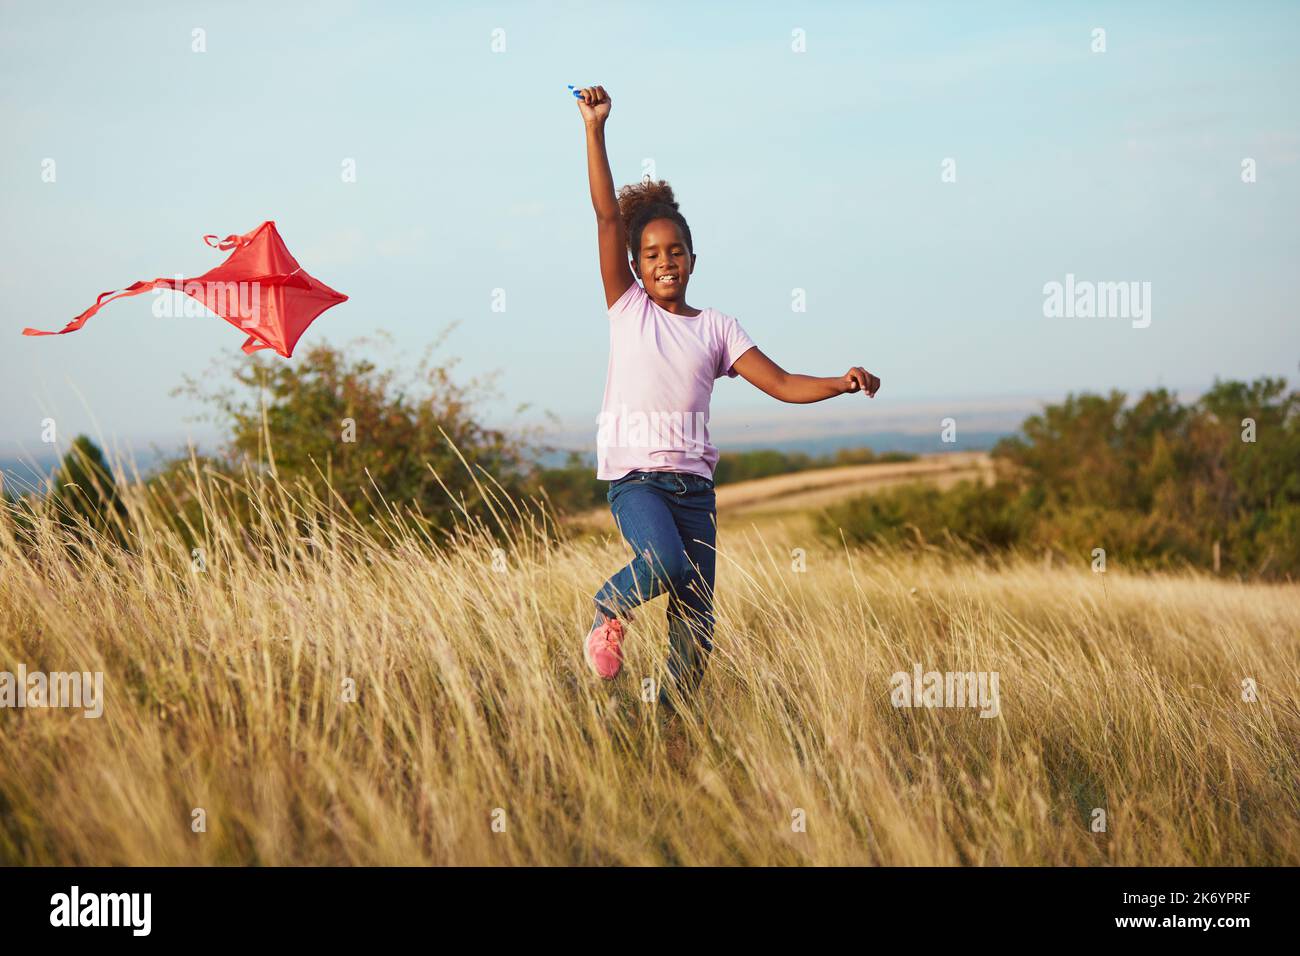 child summer fun lifestyle friend kite outdoor girl field joy childhood run Stock Photo